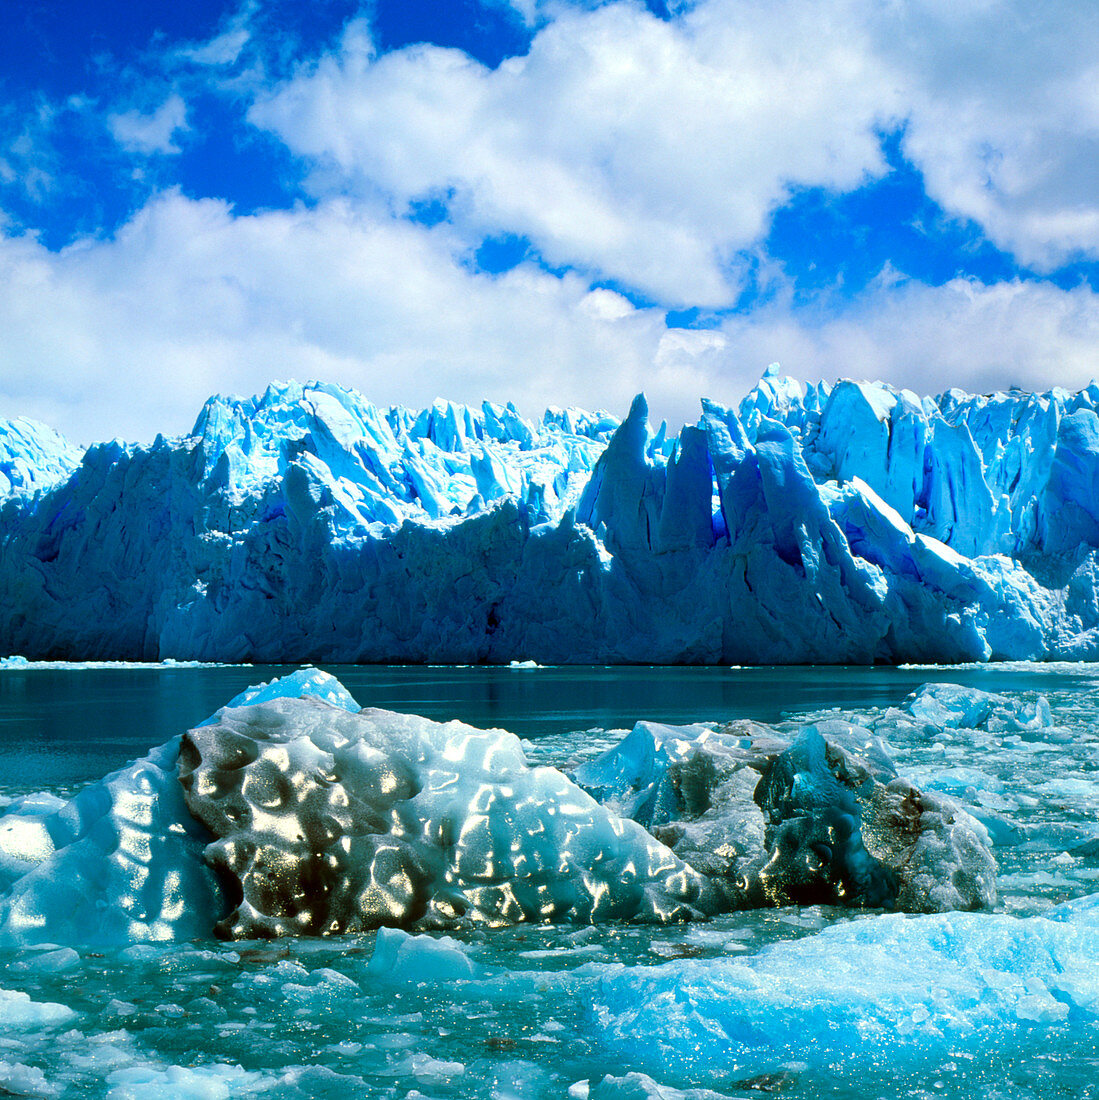 Dirty icebergby Ilulissat greenland